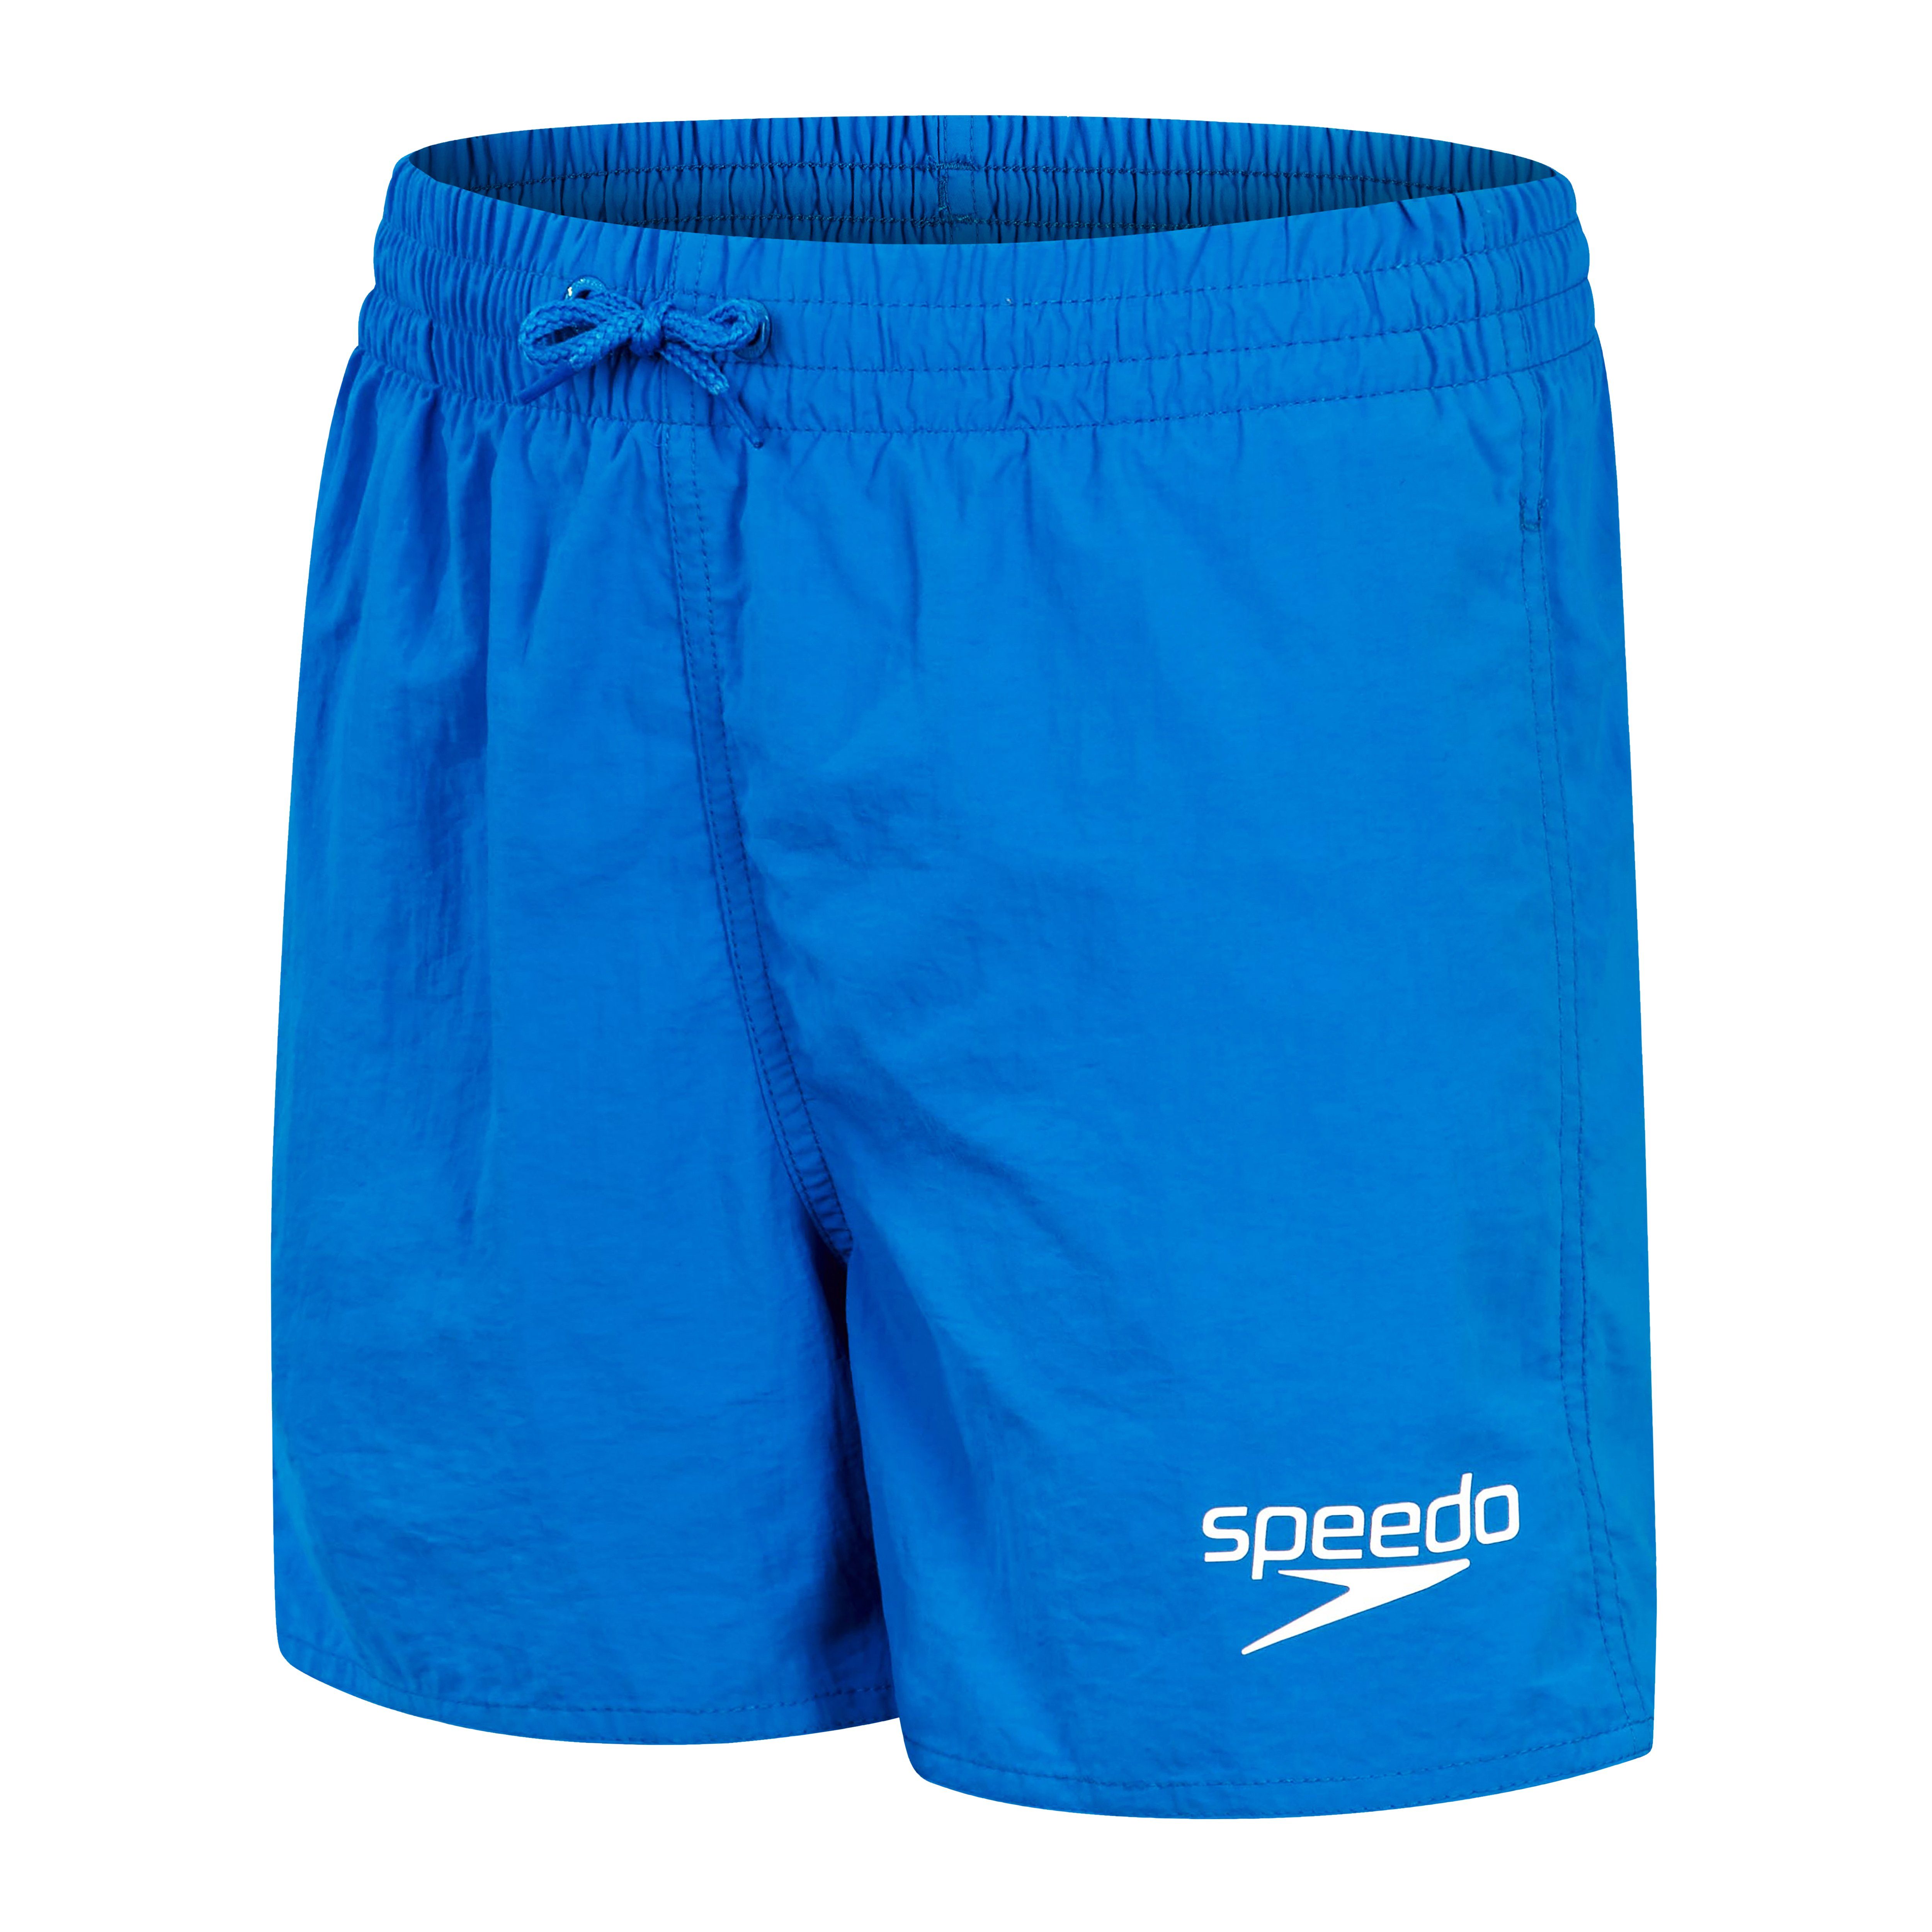 Verstellbare blau John Speedo Kinder Badeshorts Passform Bade-Shorts